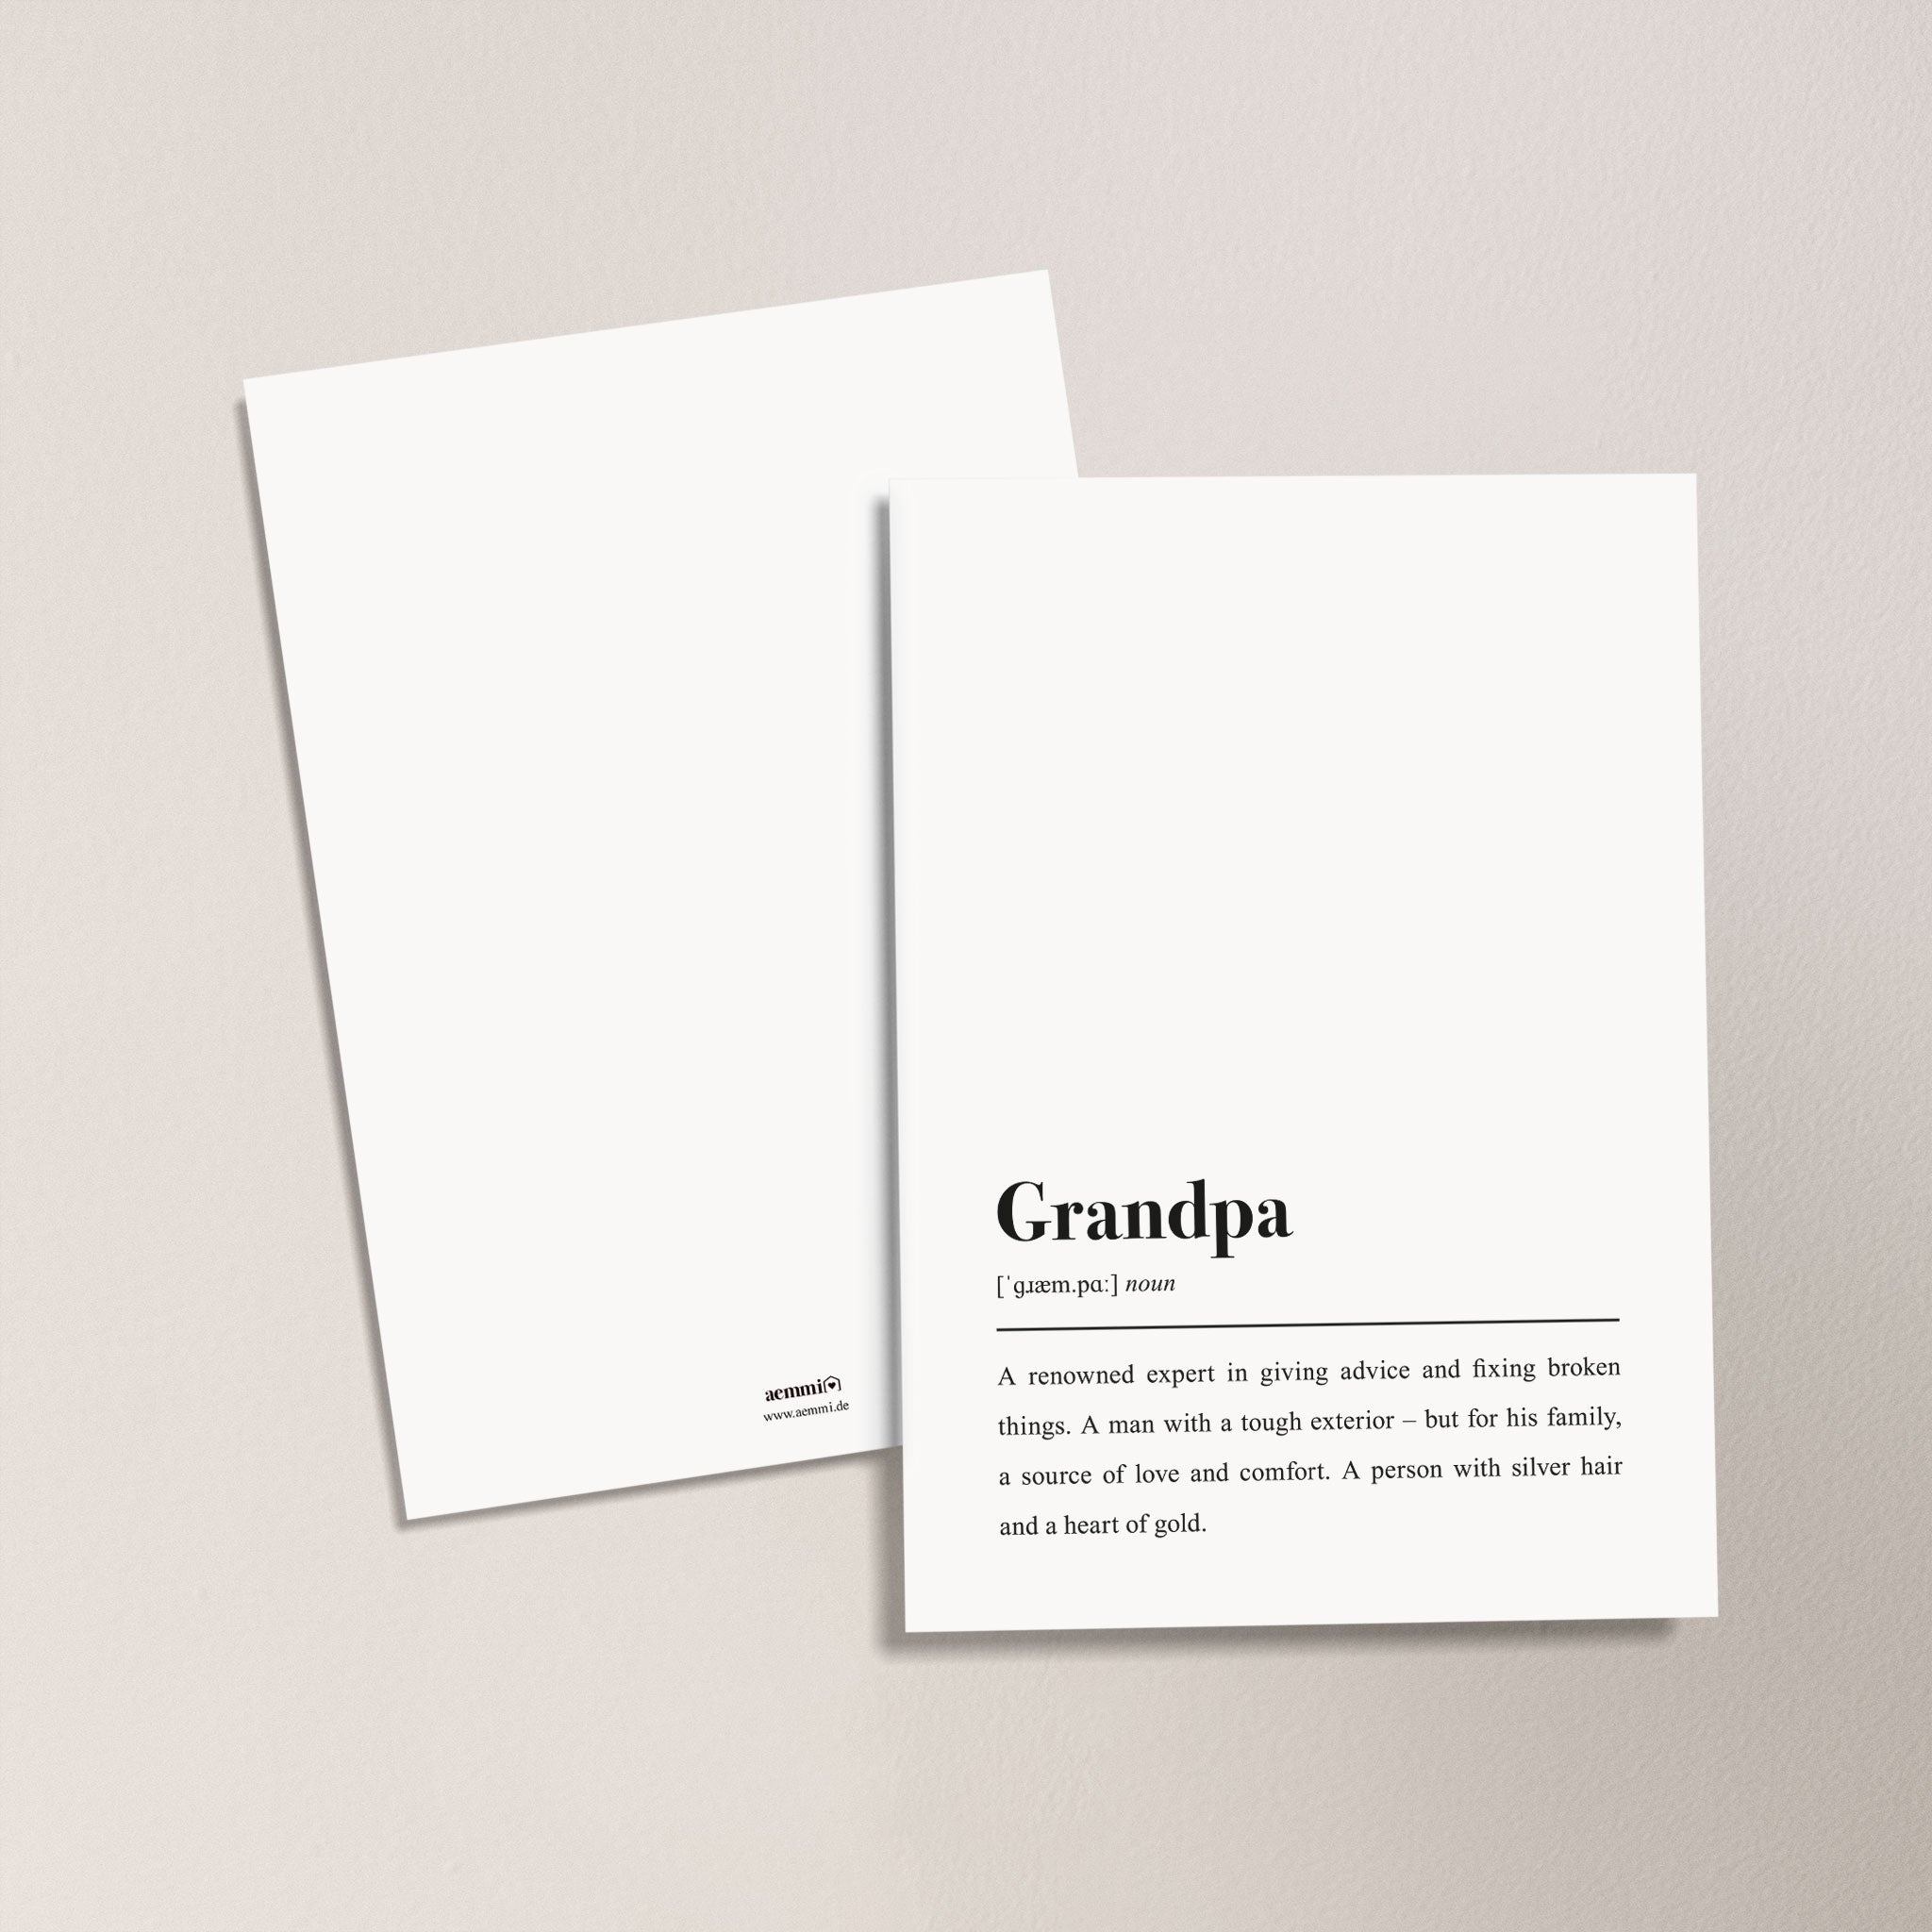 Grandpa Definition (Englisch): Postkarte